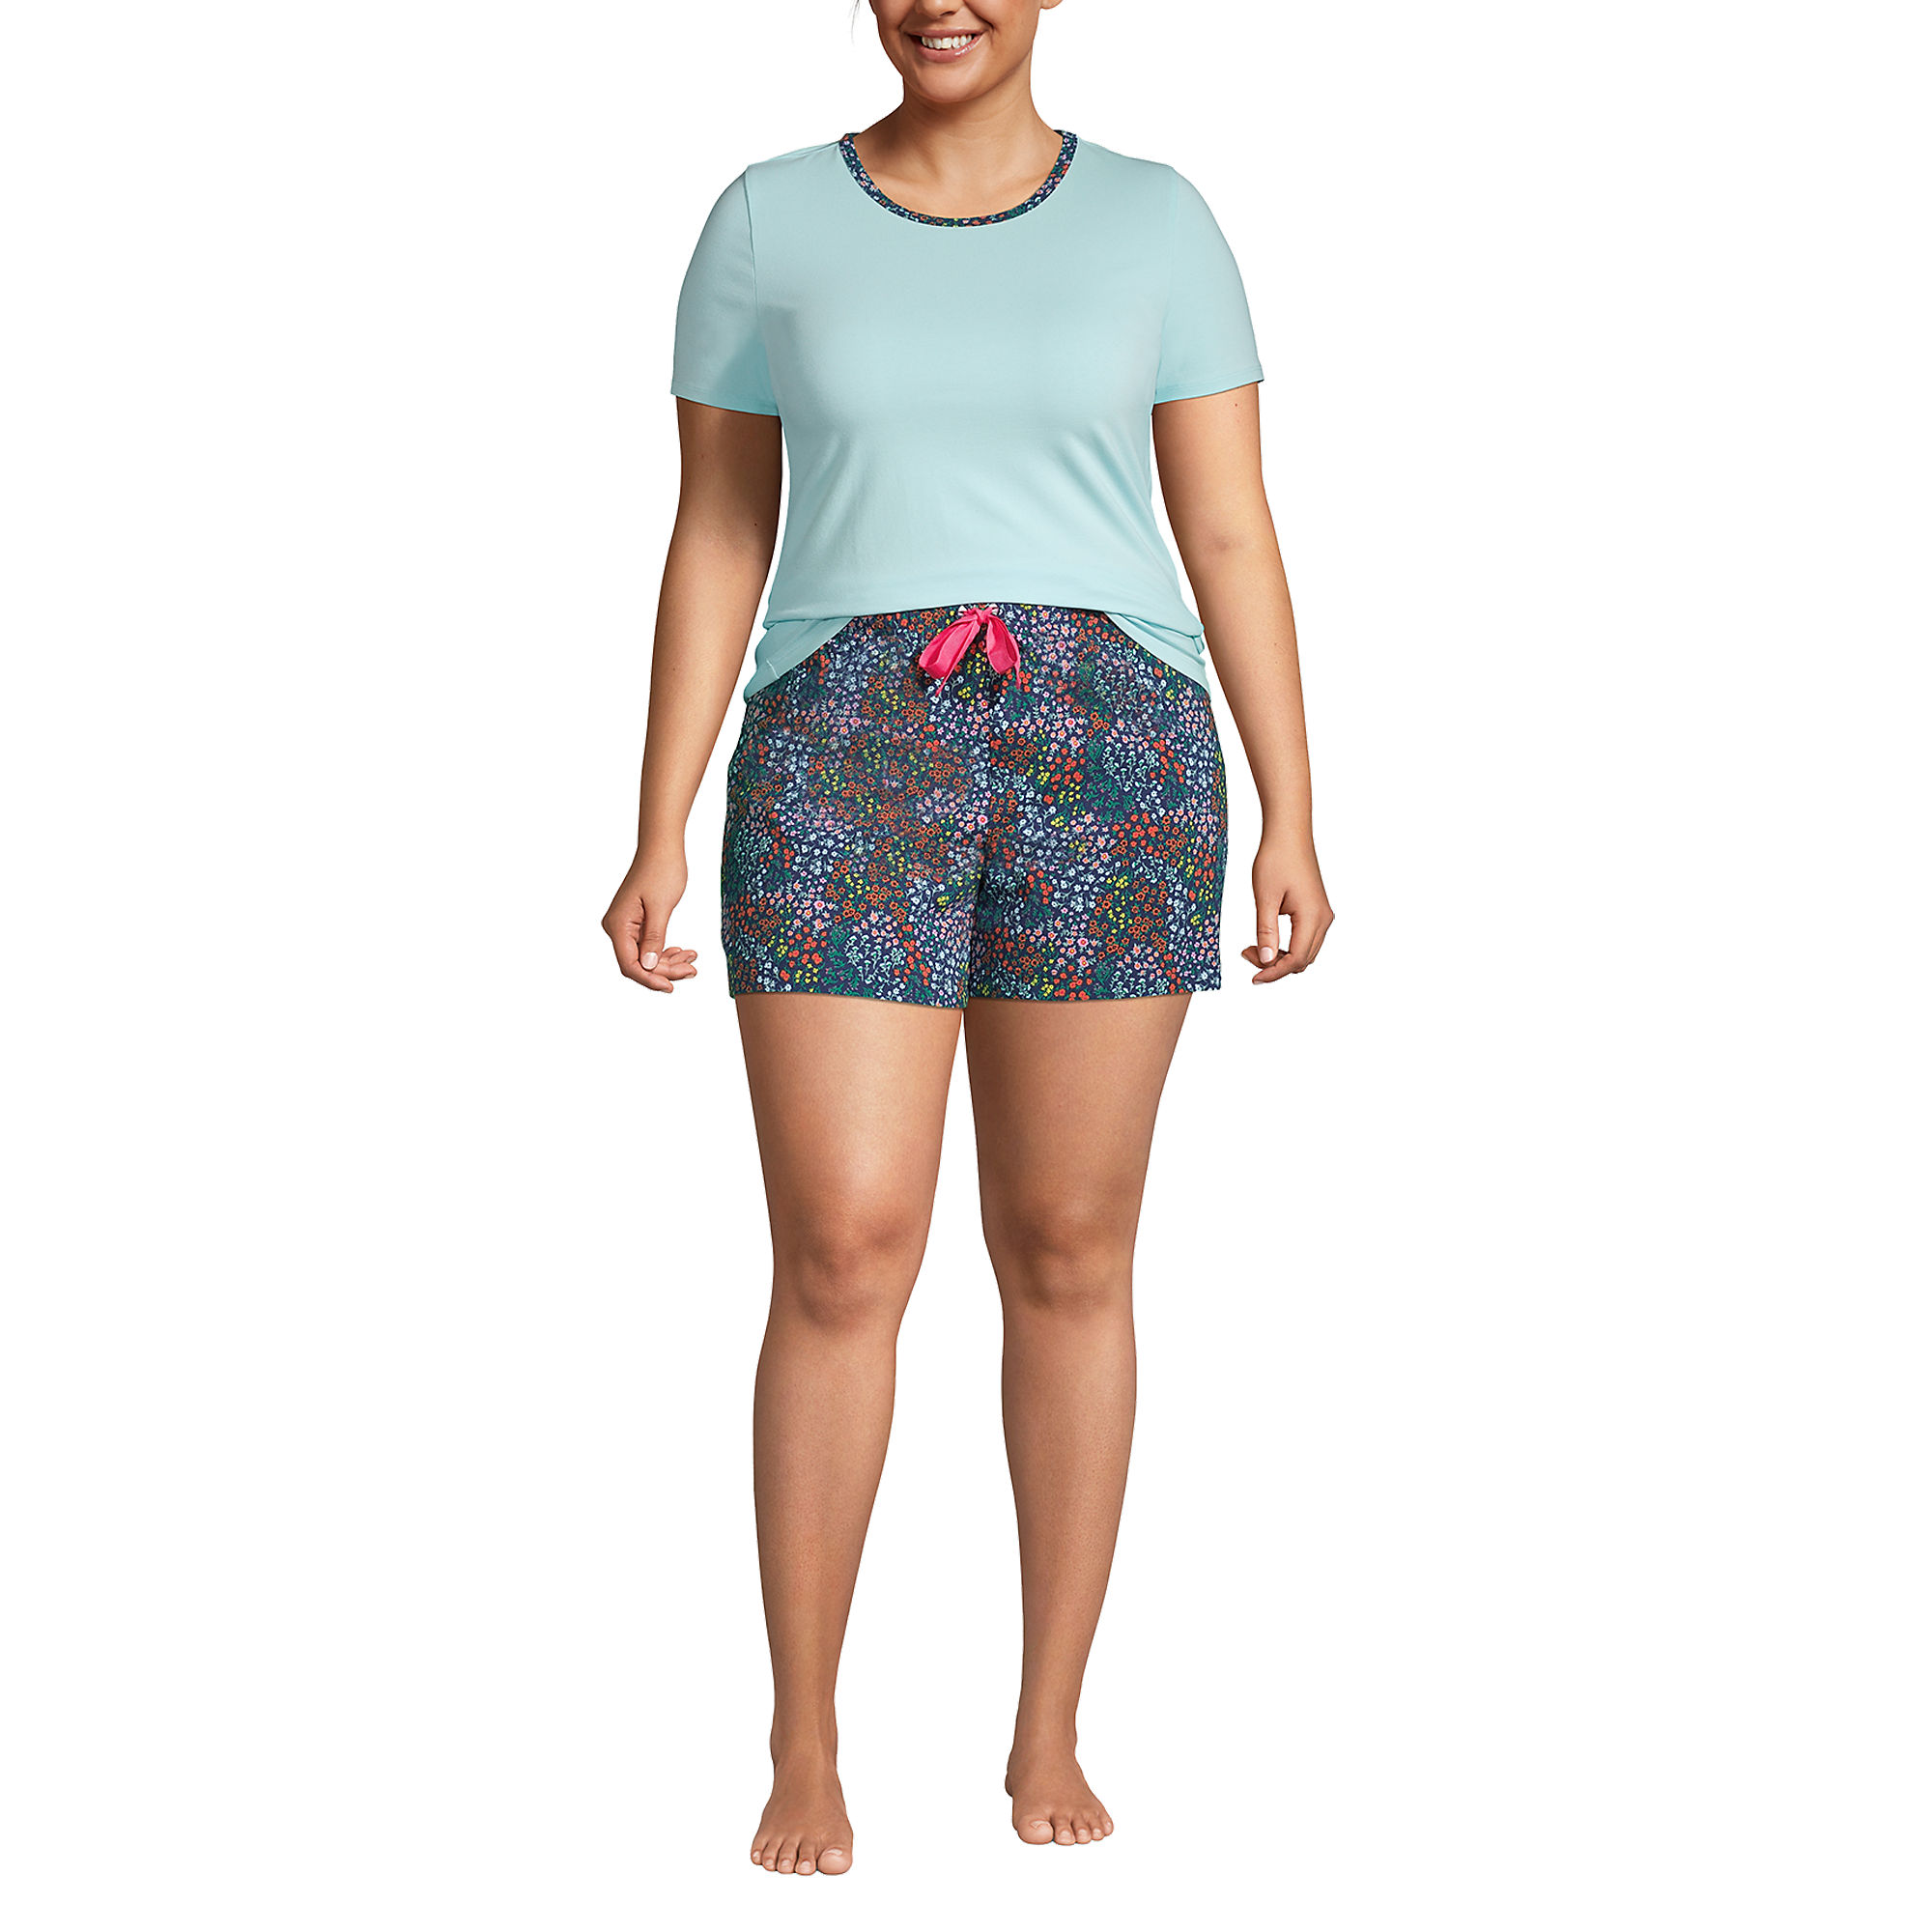 Lands End Women's Plus Size Knit Pajama Short Set Short Sleeve T-Shirt and Short (Deep Sea Navy Mini Floral)